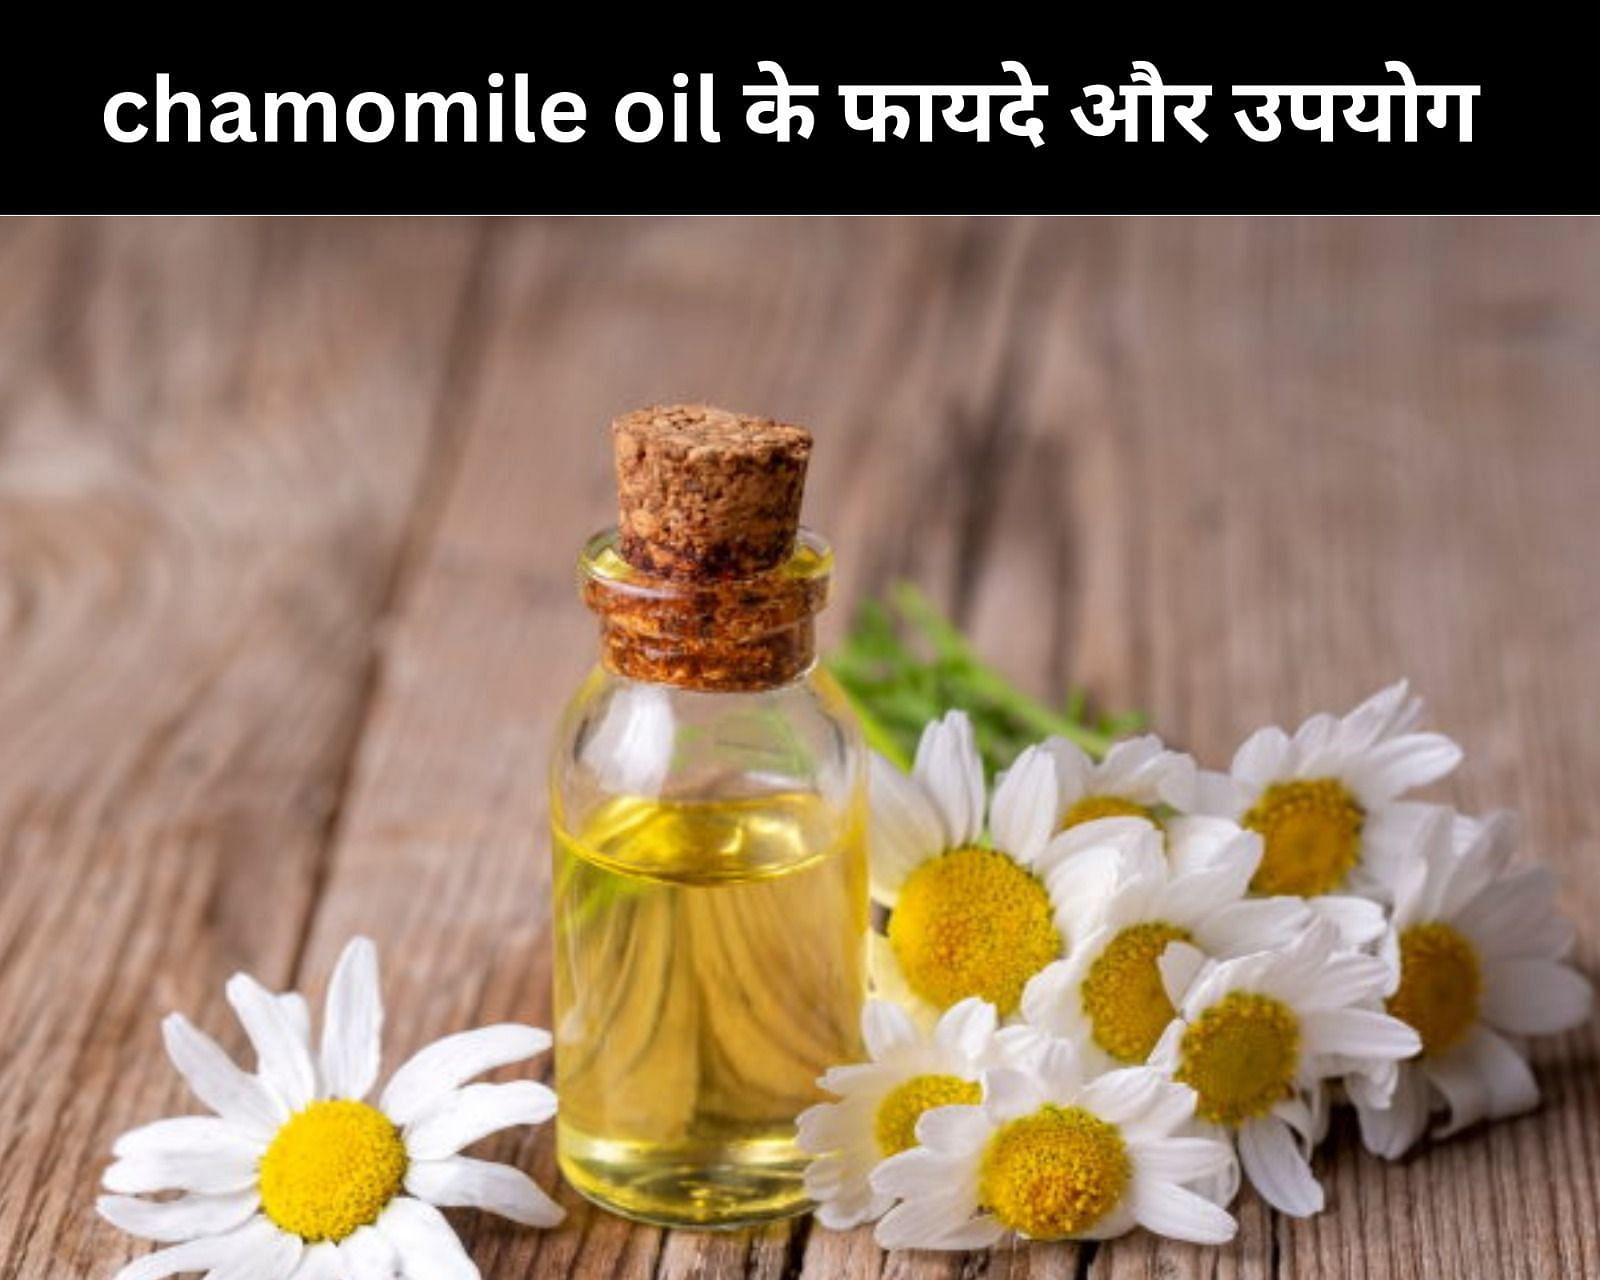 chamomile oil के फायदे और उपयोग  (फोटो - sportskeedaहिन्दी)